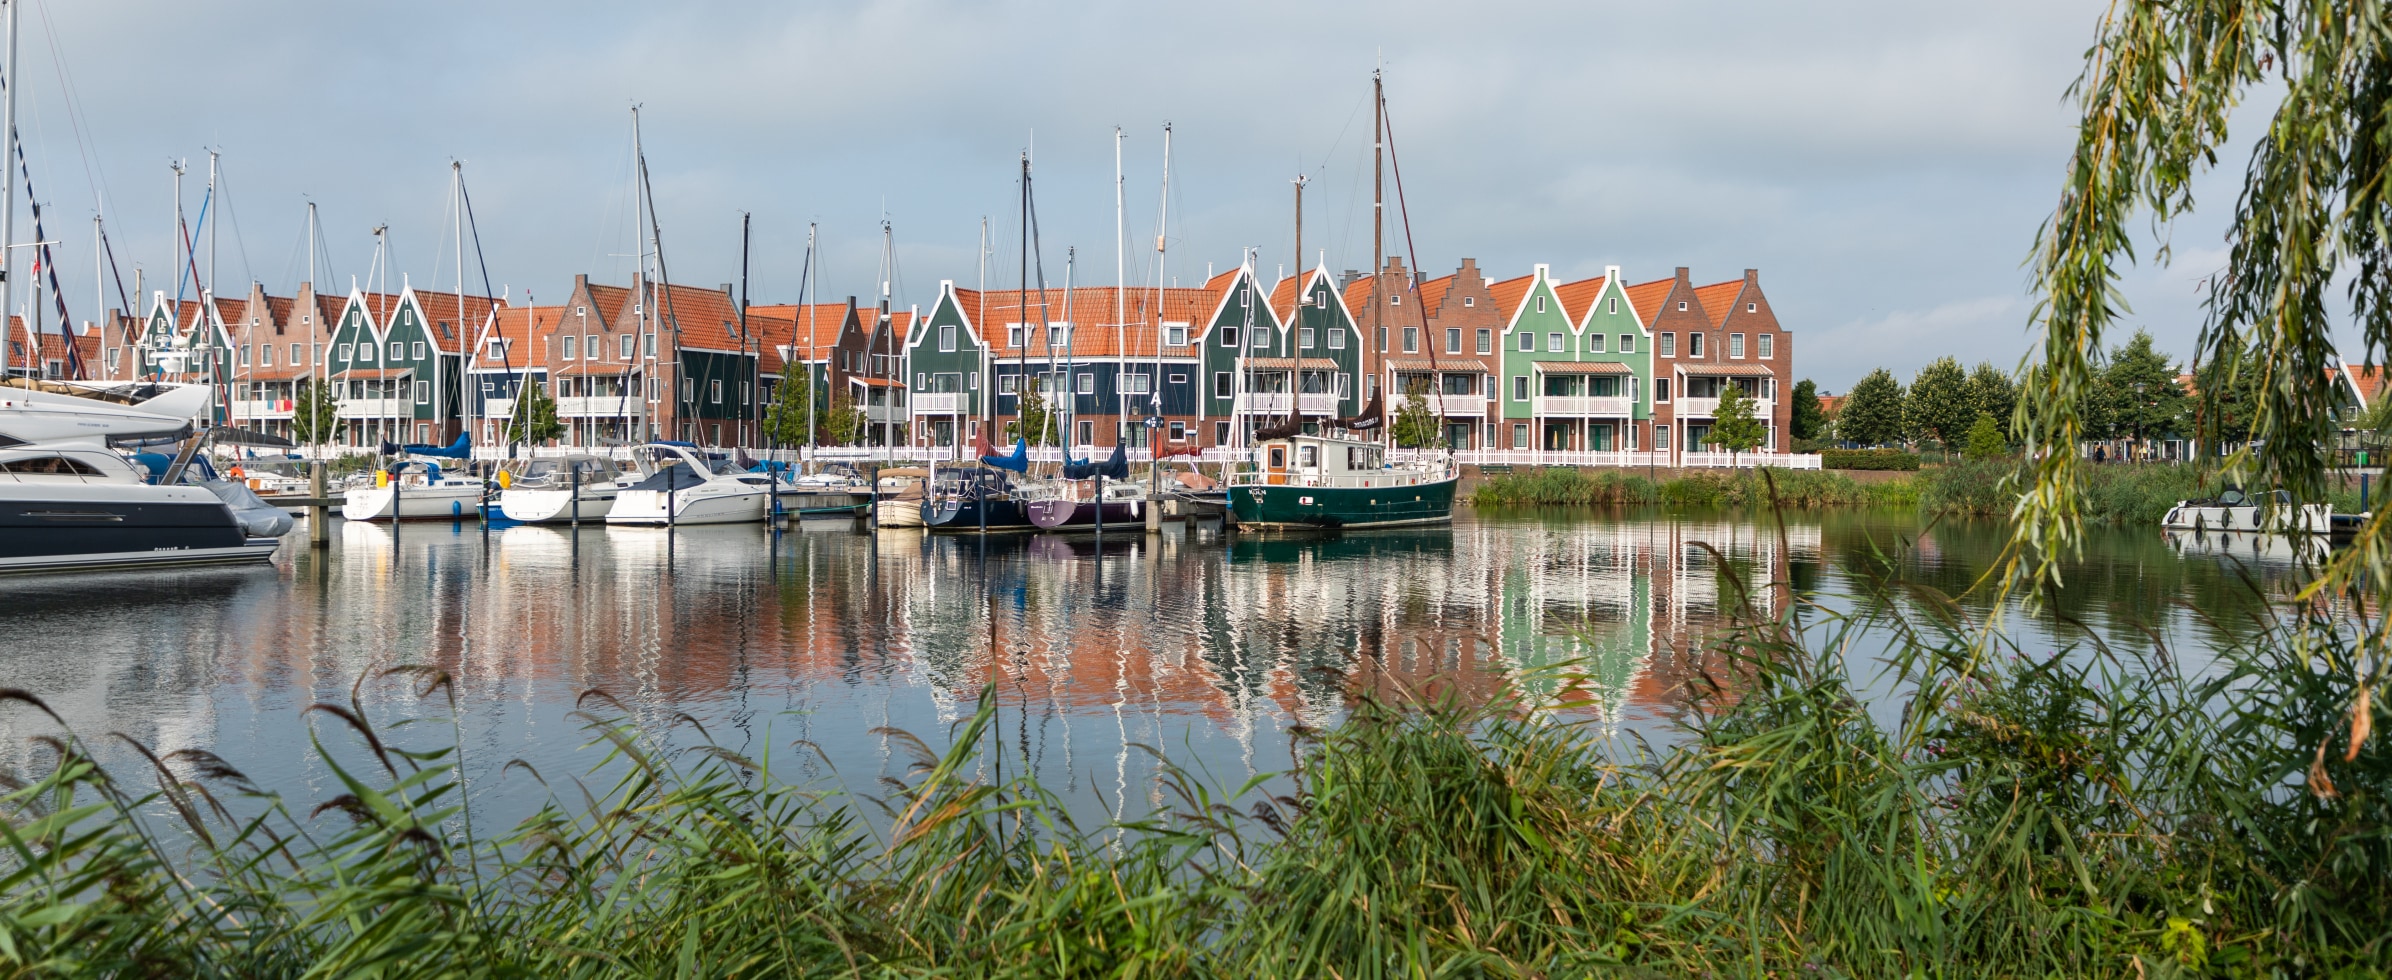 visvakantie noord-holland | De ideale visbestemming in Noord-Holland